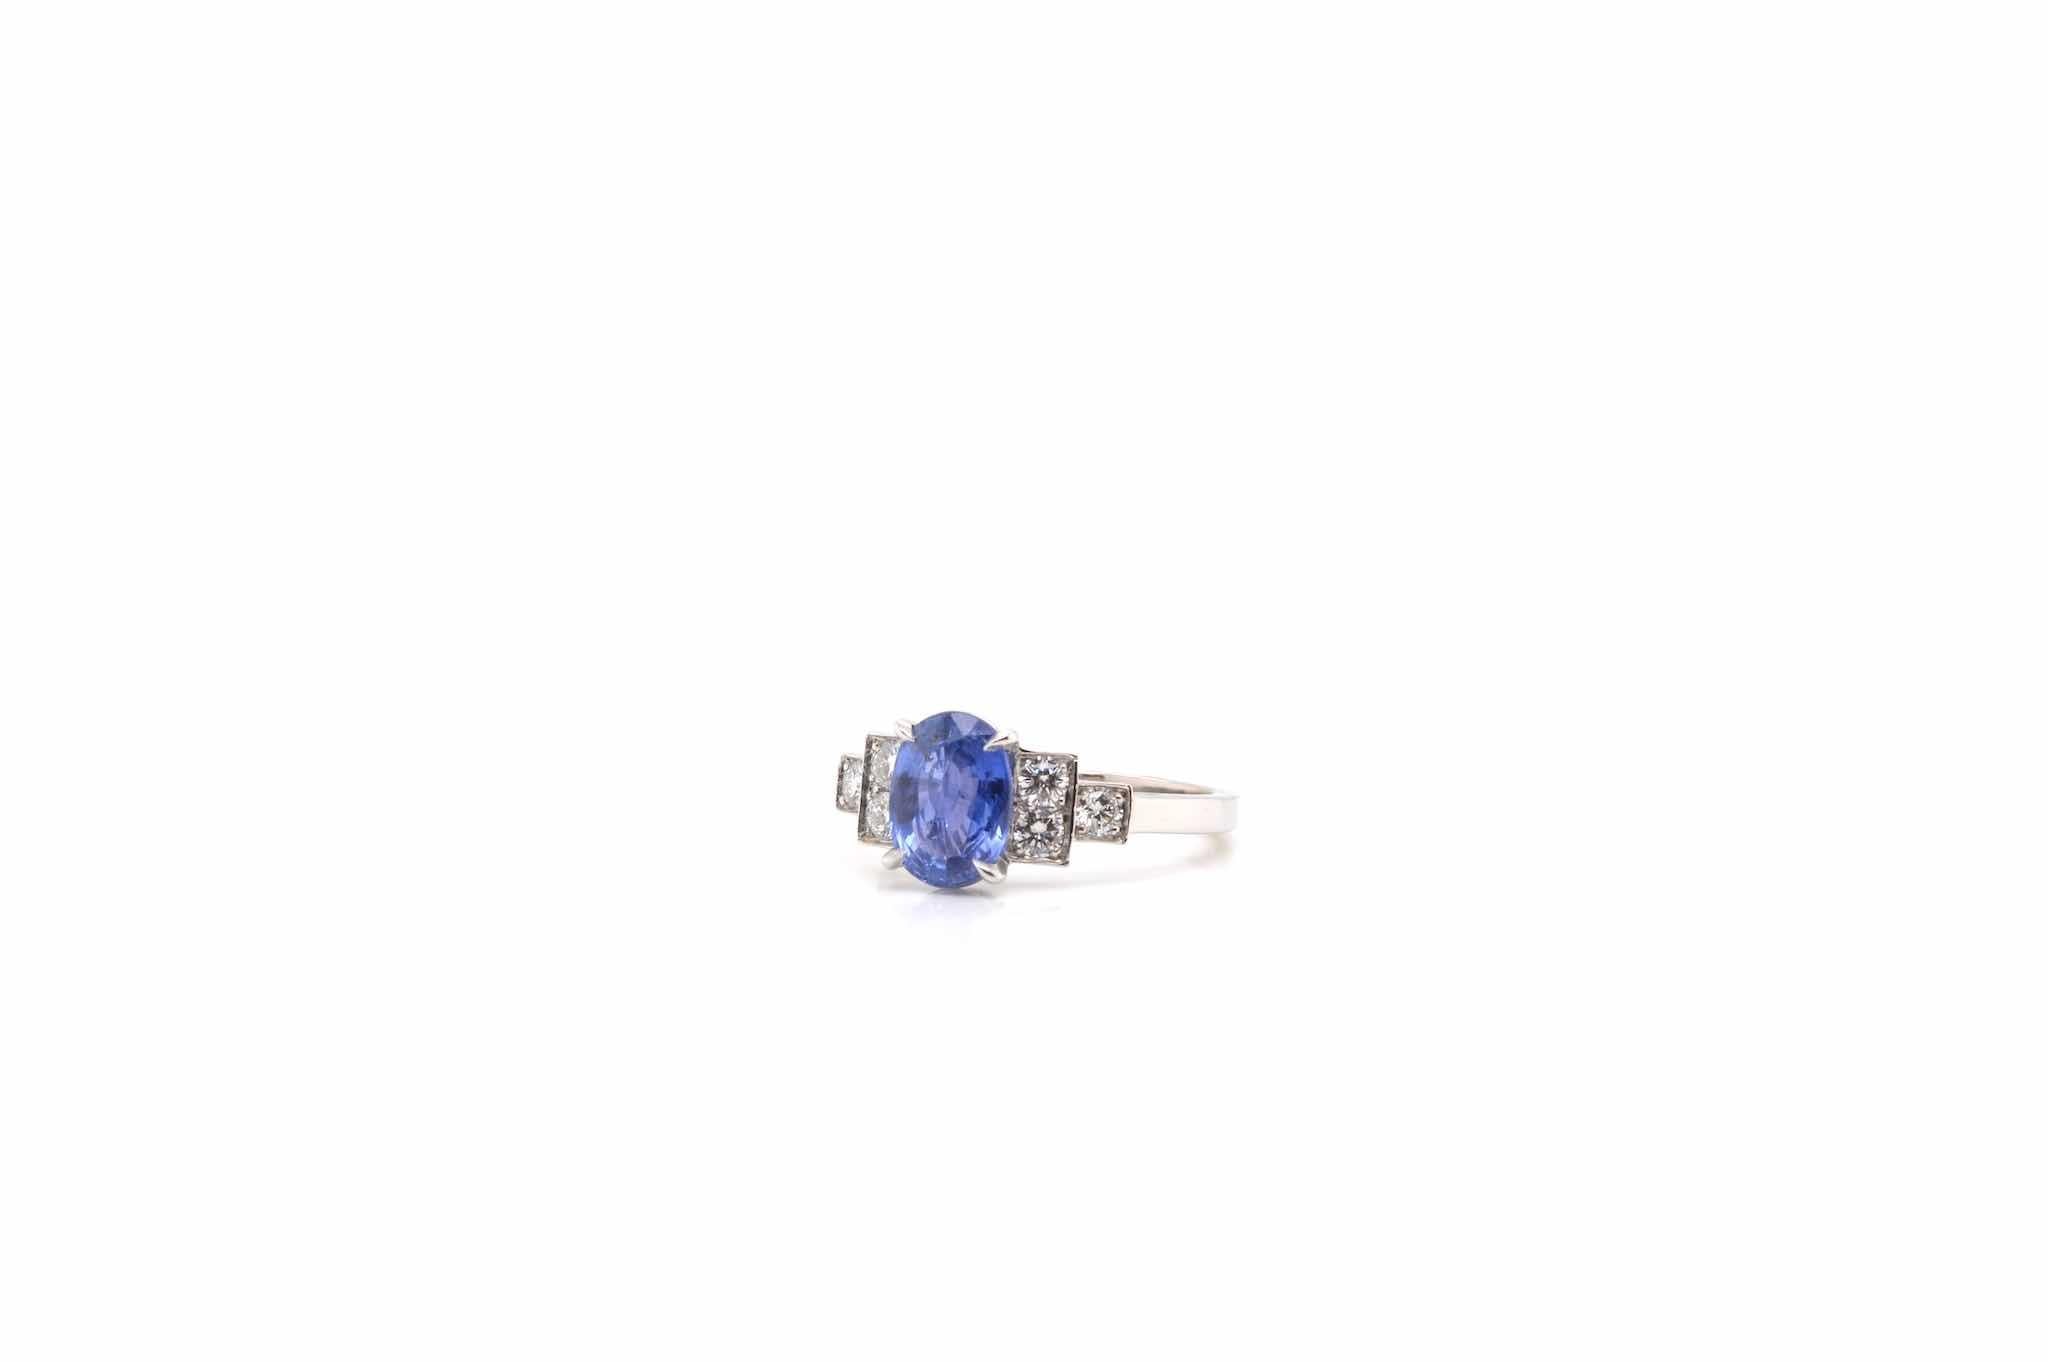 Oval Cut 2.14 carats ceylon sapphire ring with brilliant cut diamonds